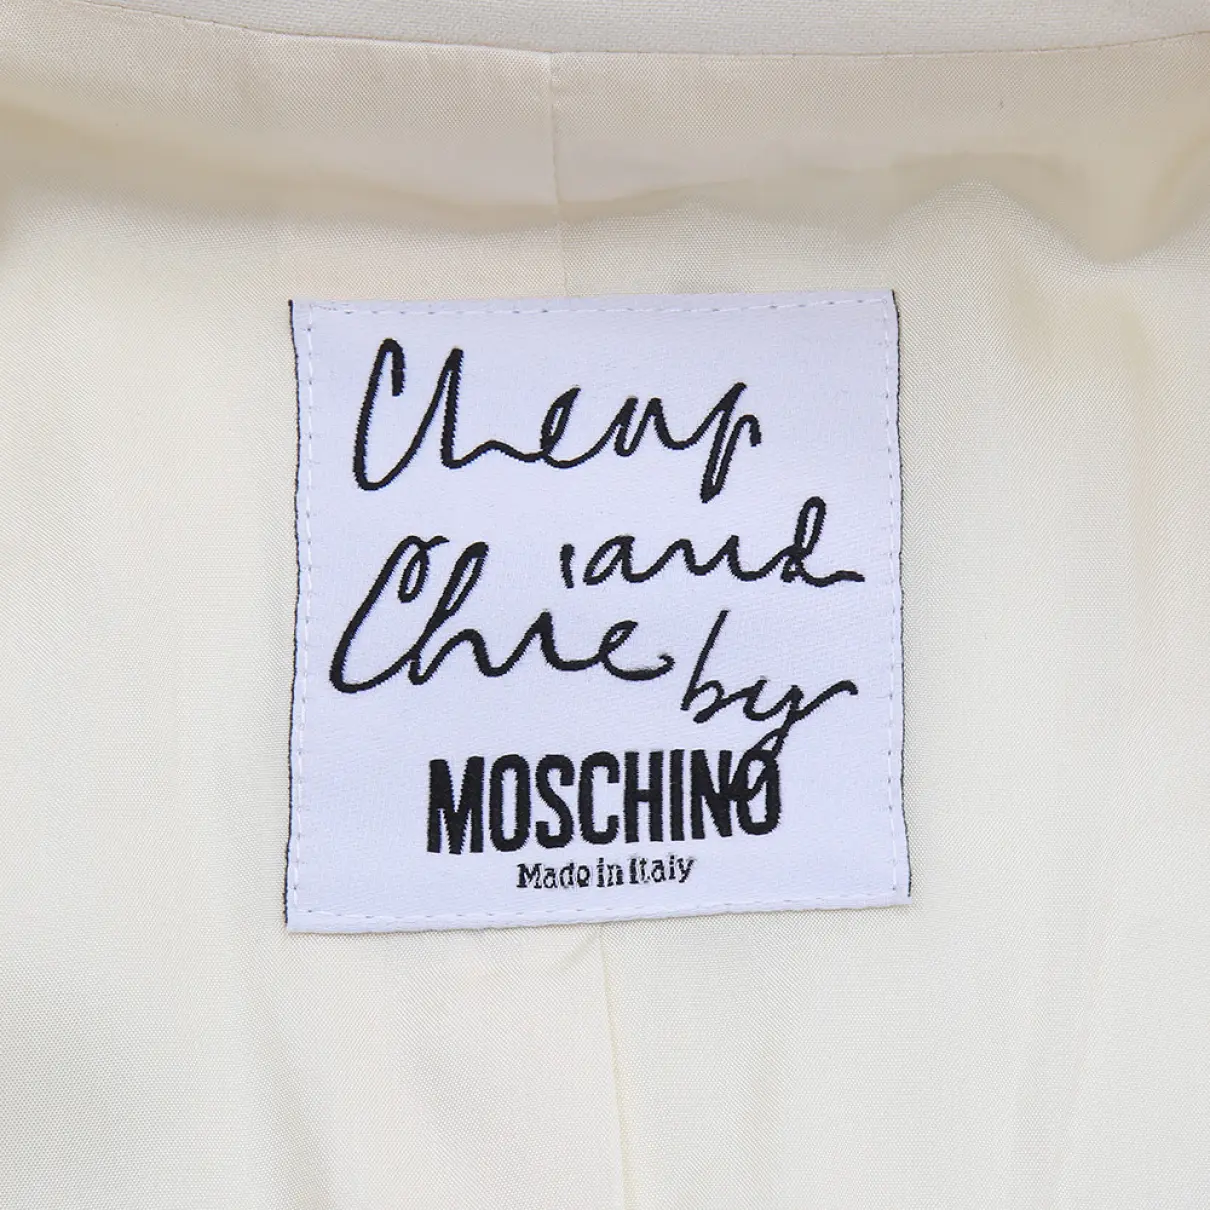 Buy Moschino Cheap And Chic Blazer online